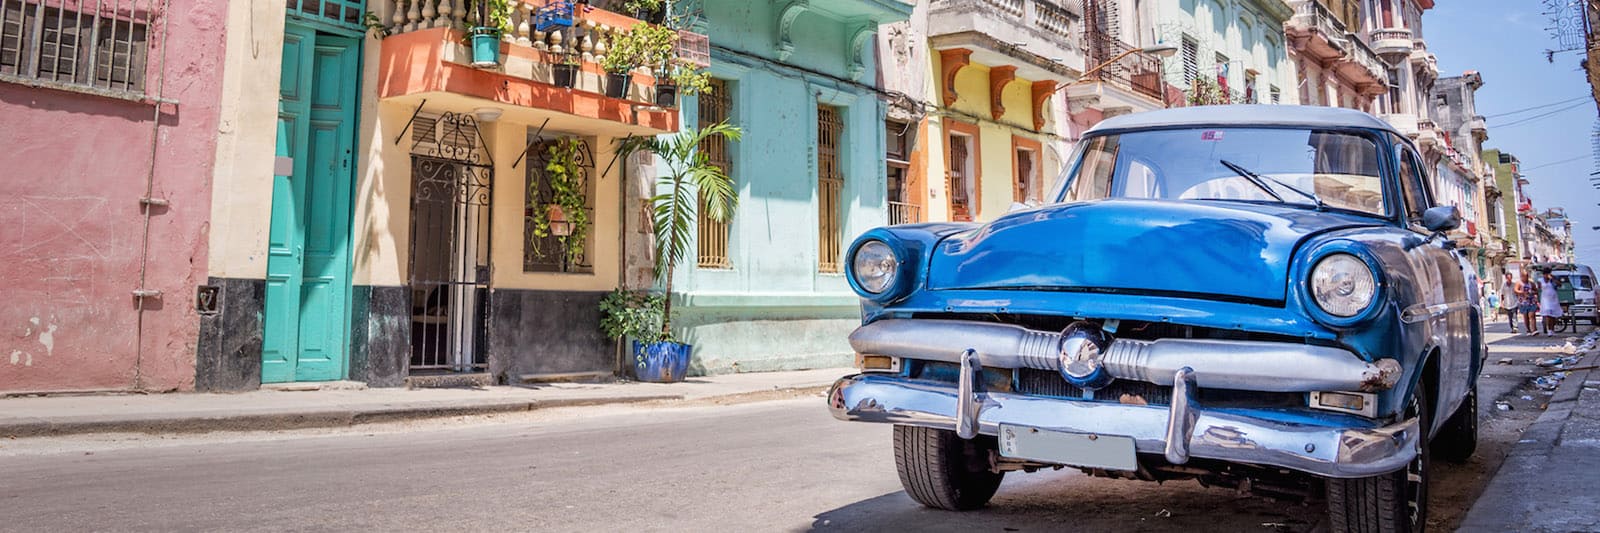 Cuba Photography Tips